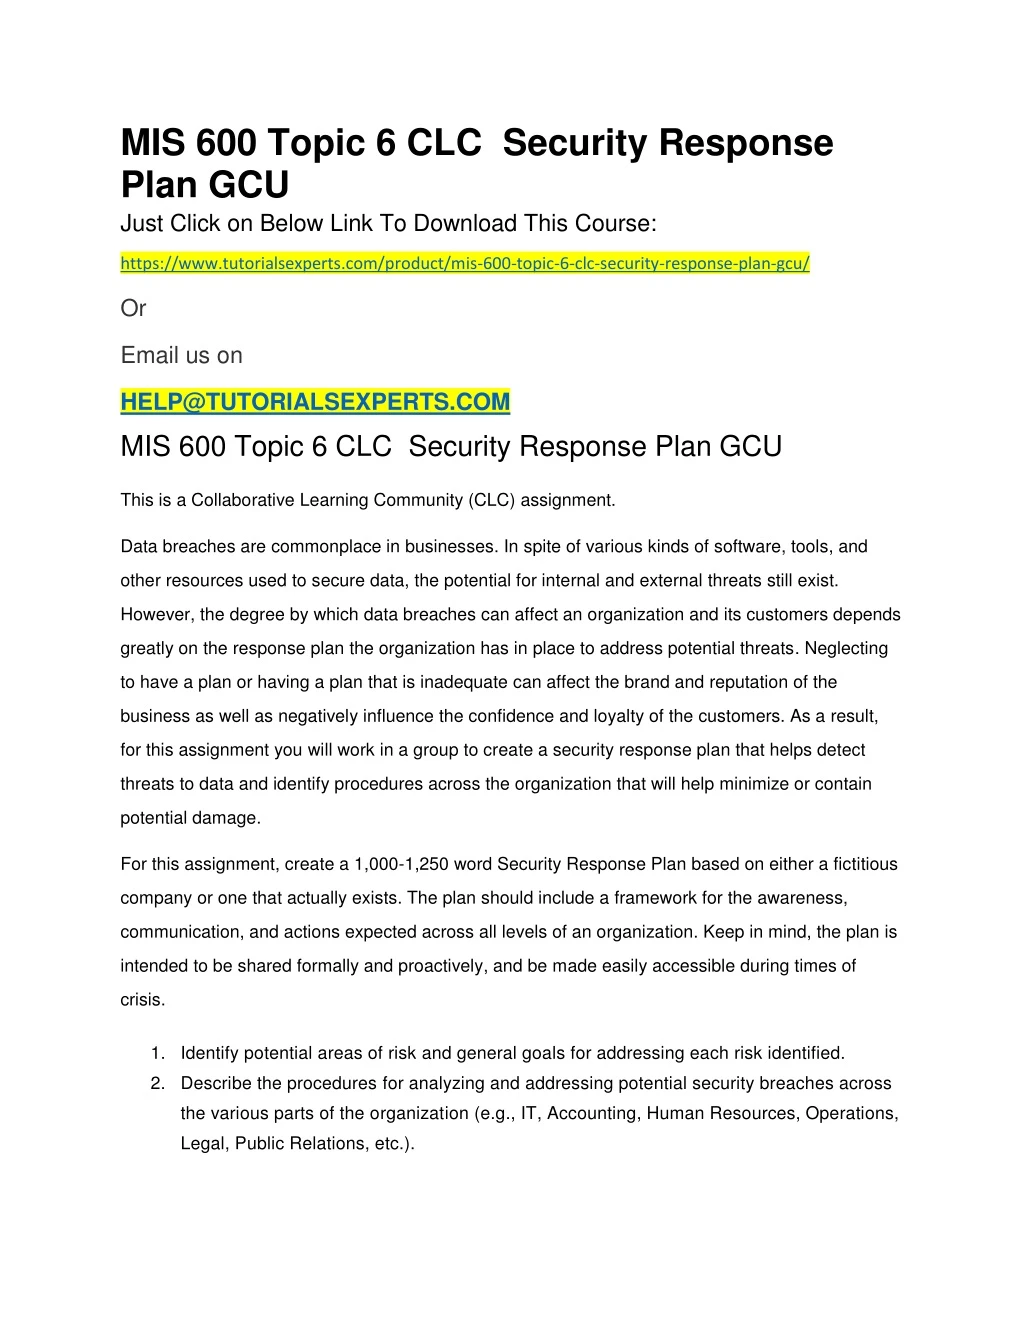 mis 600 topic 6 clc security response plan